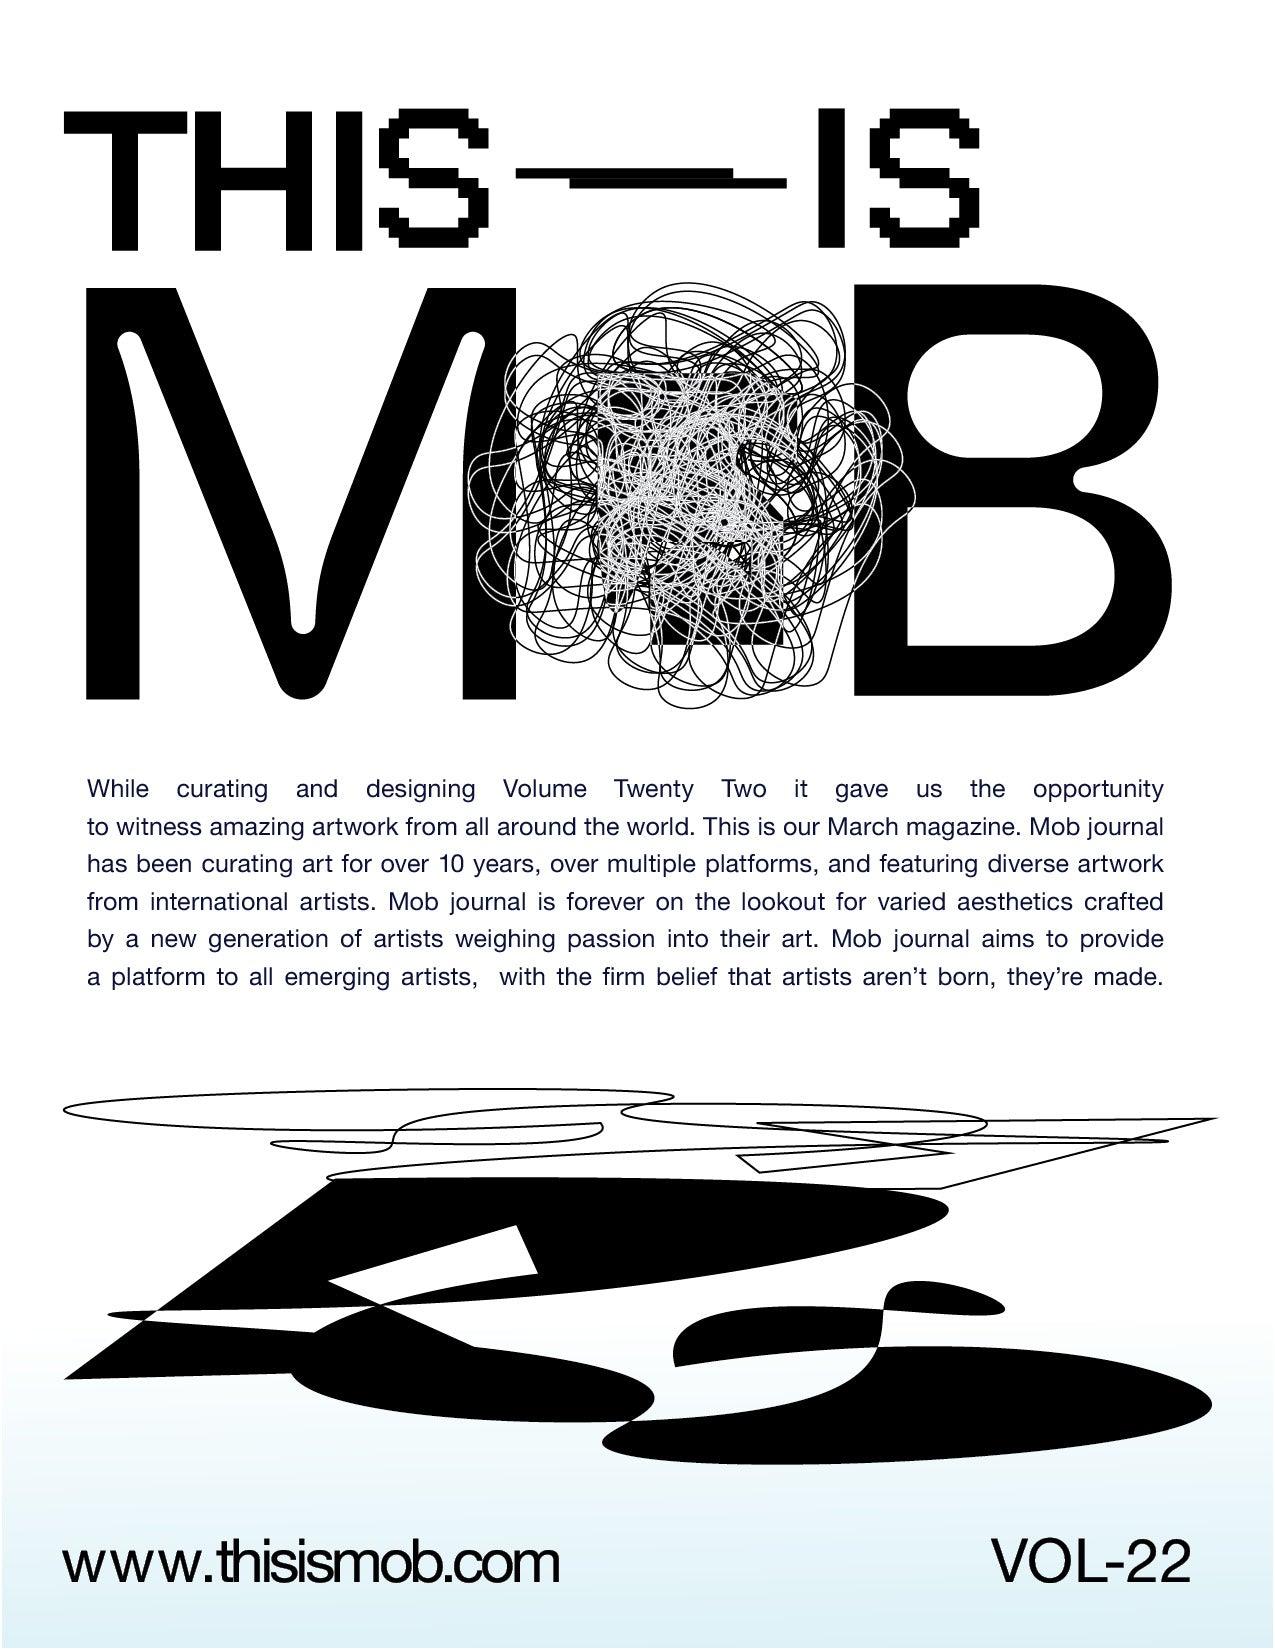 MOB JOURNAL | VOLUME TWENTY TWO | ISSUE #29 - Mob Journal